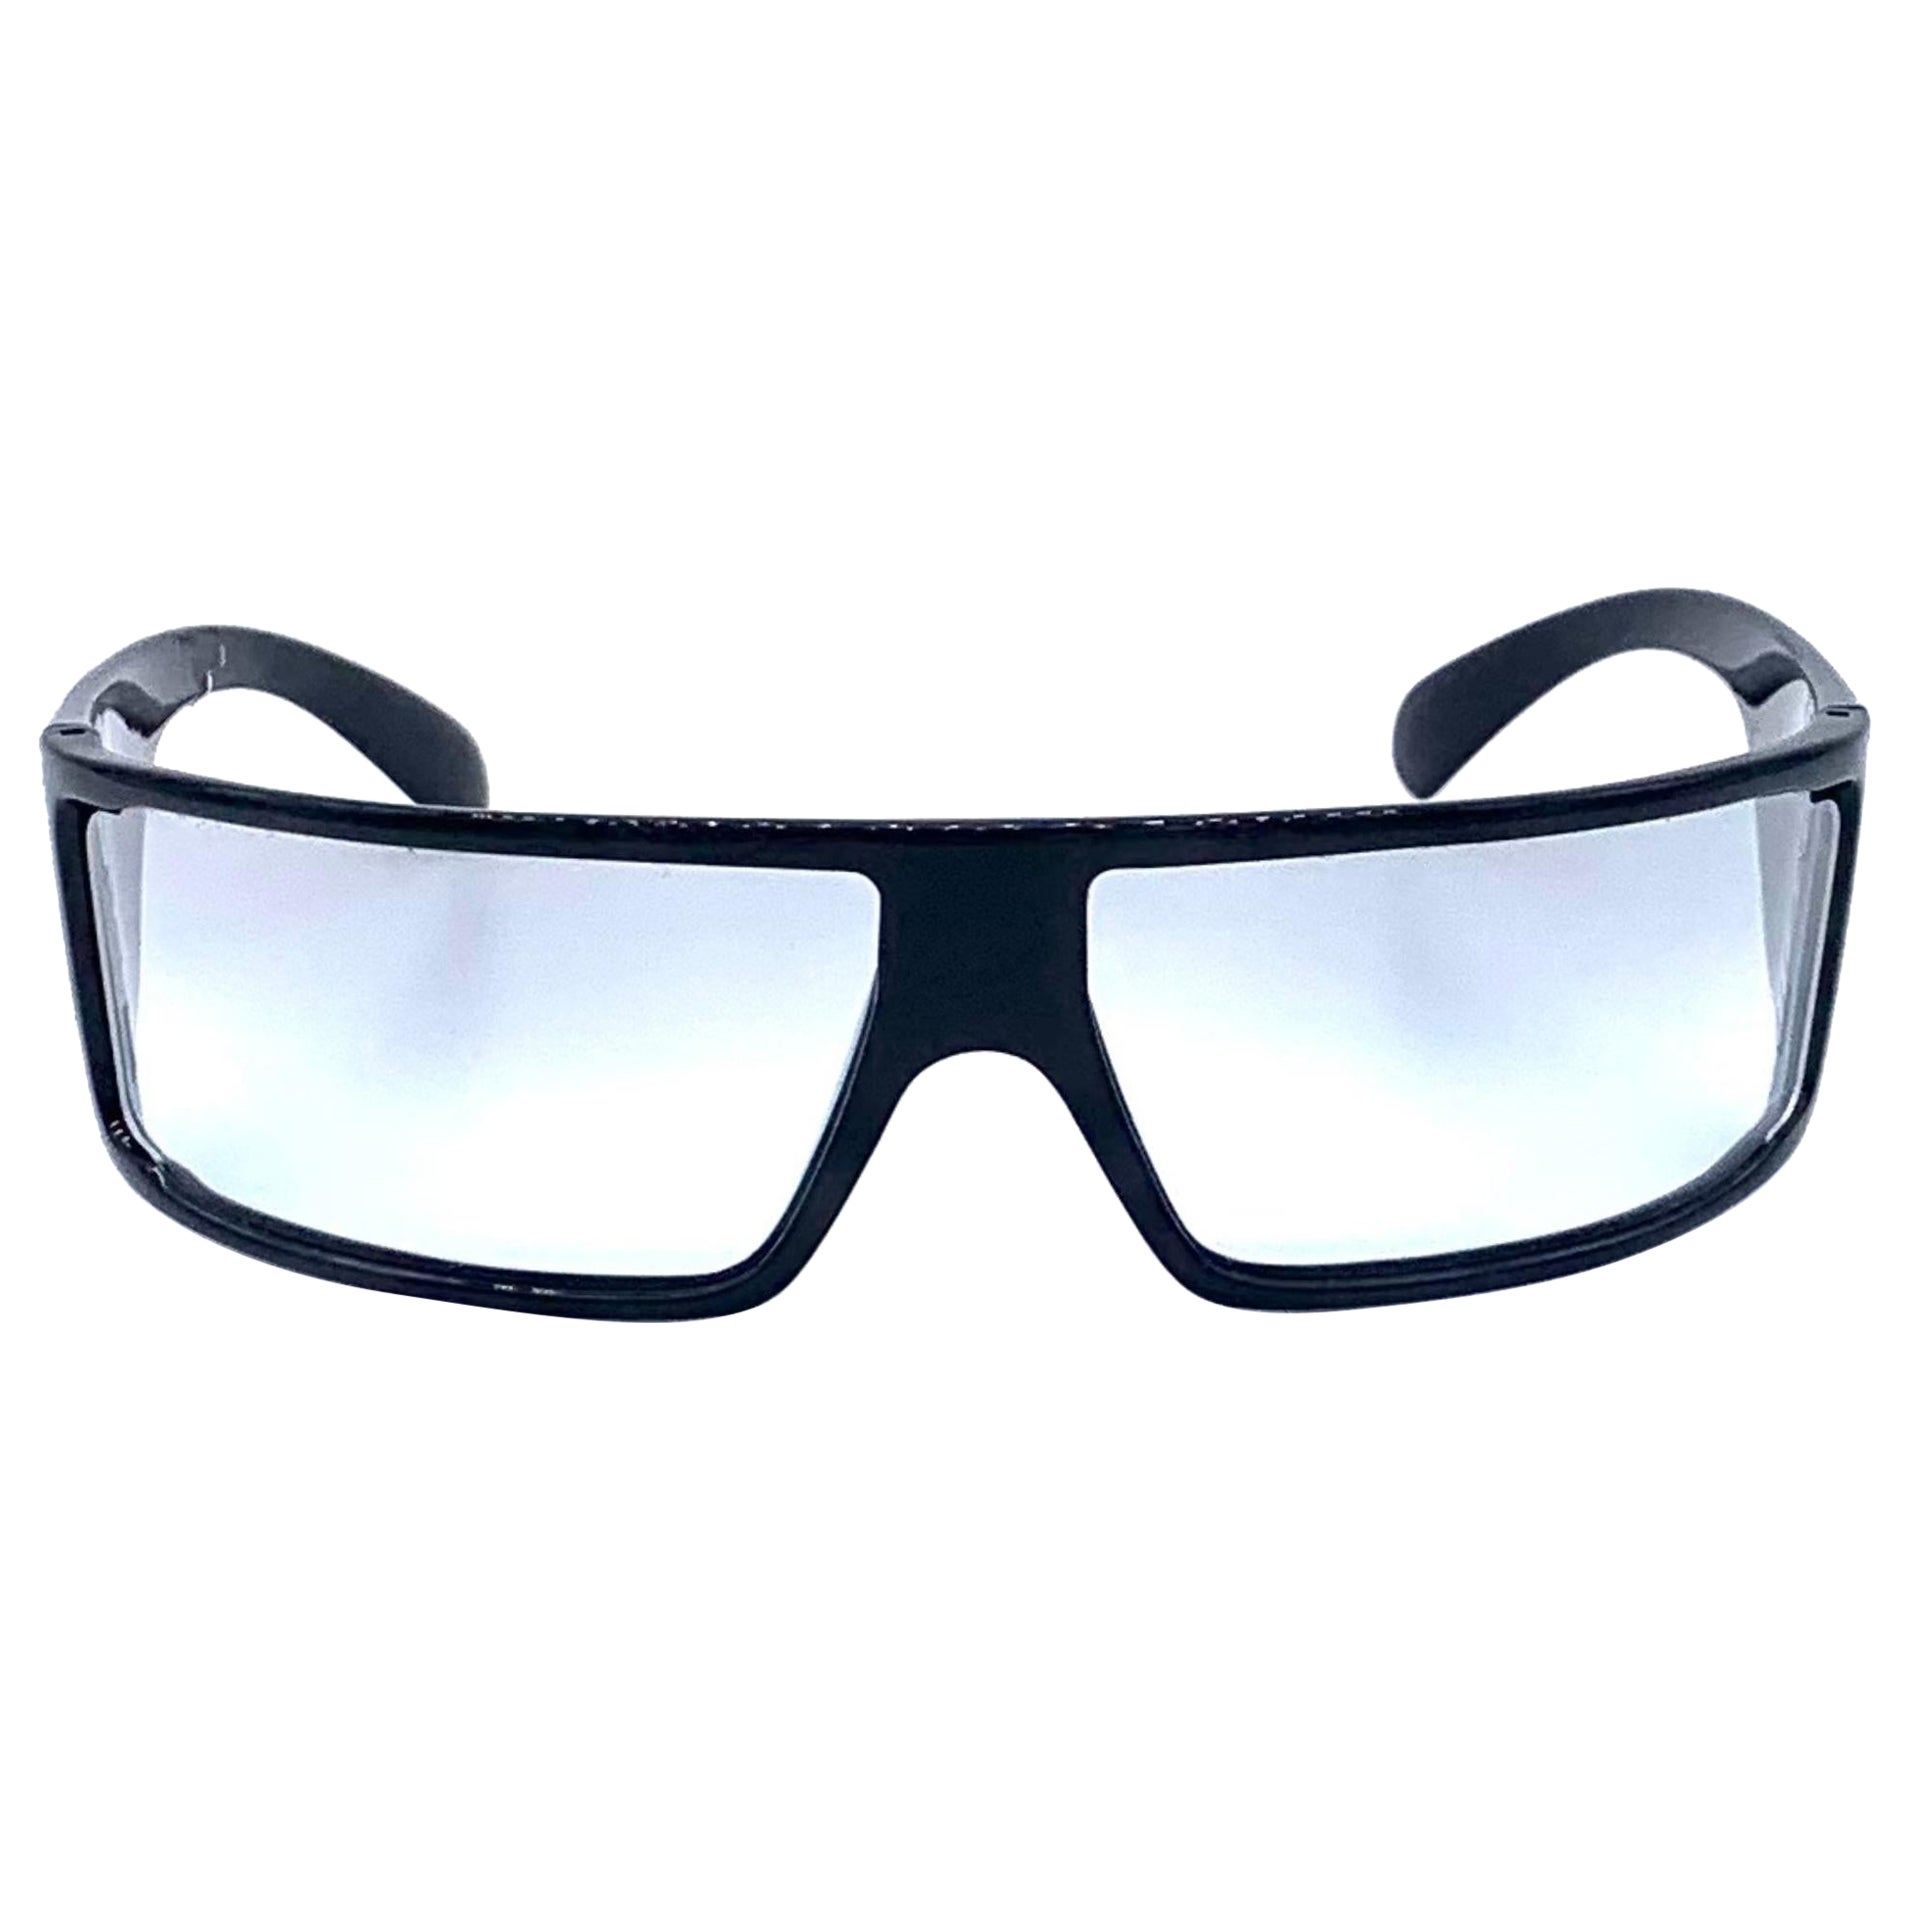 Versus Acetate Sunglasses with Clear Lens